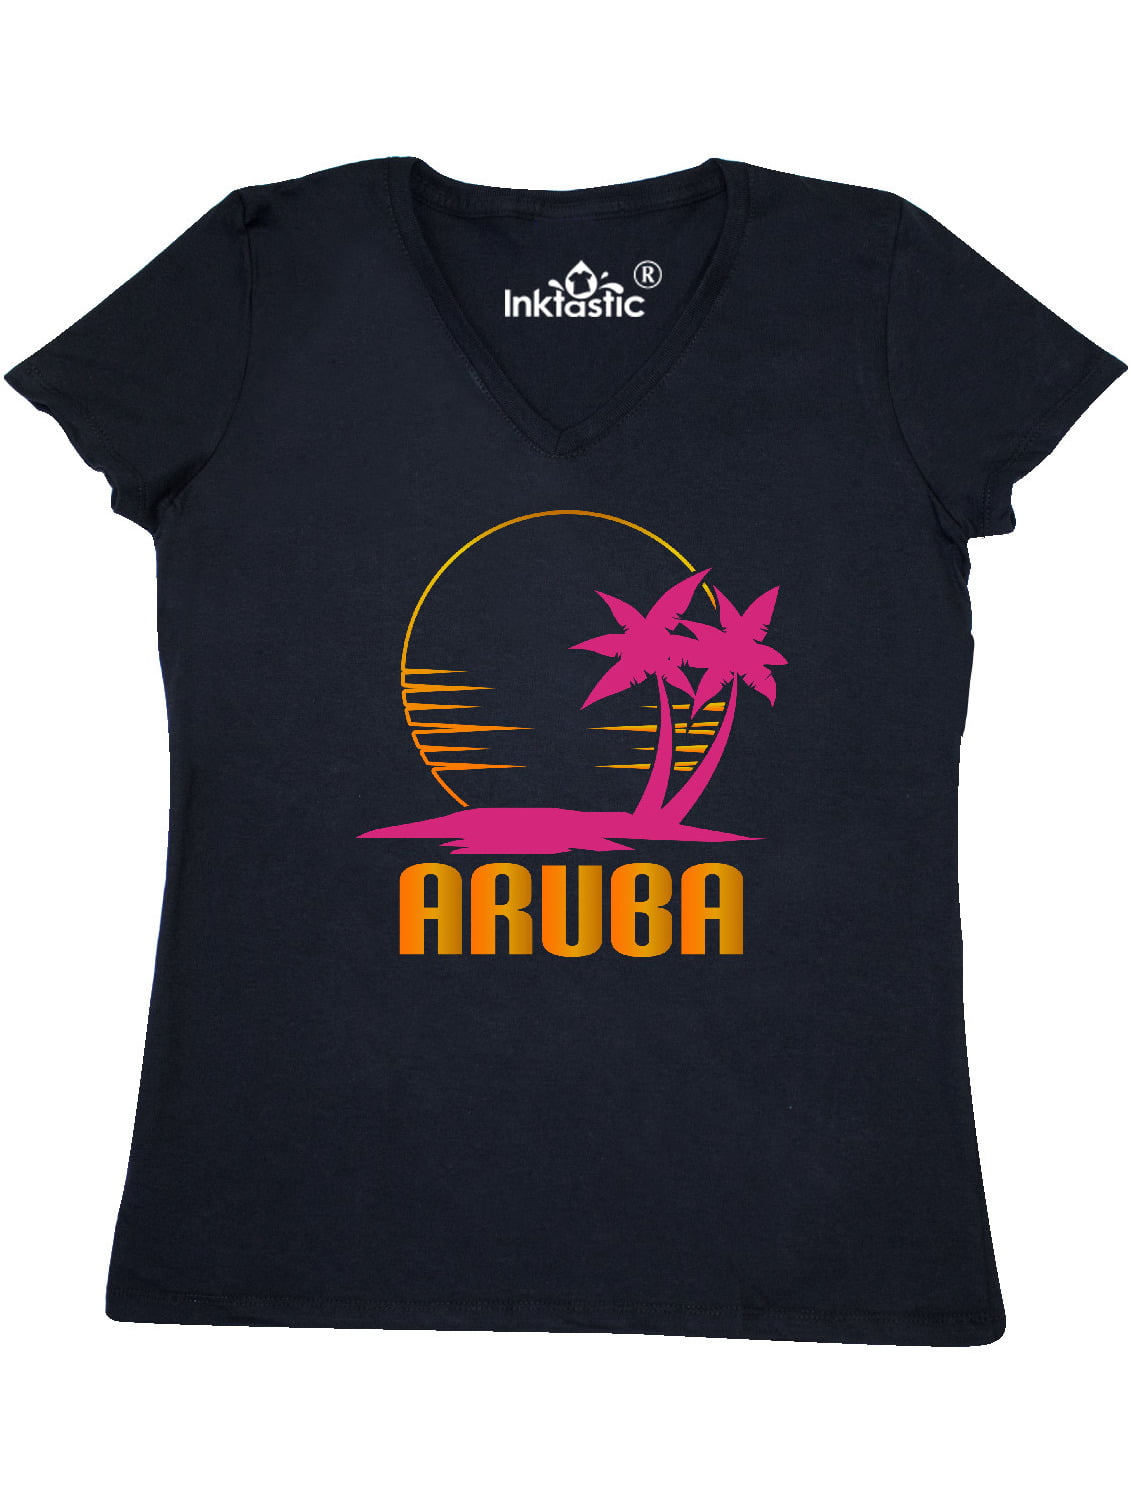 Aruba Island Womens Casual Cotton Tee Shirts Short Sleeve O-Neck Sports Tops and Blouses T-Shirt